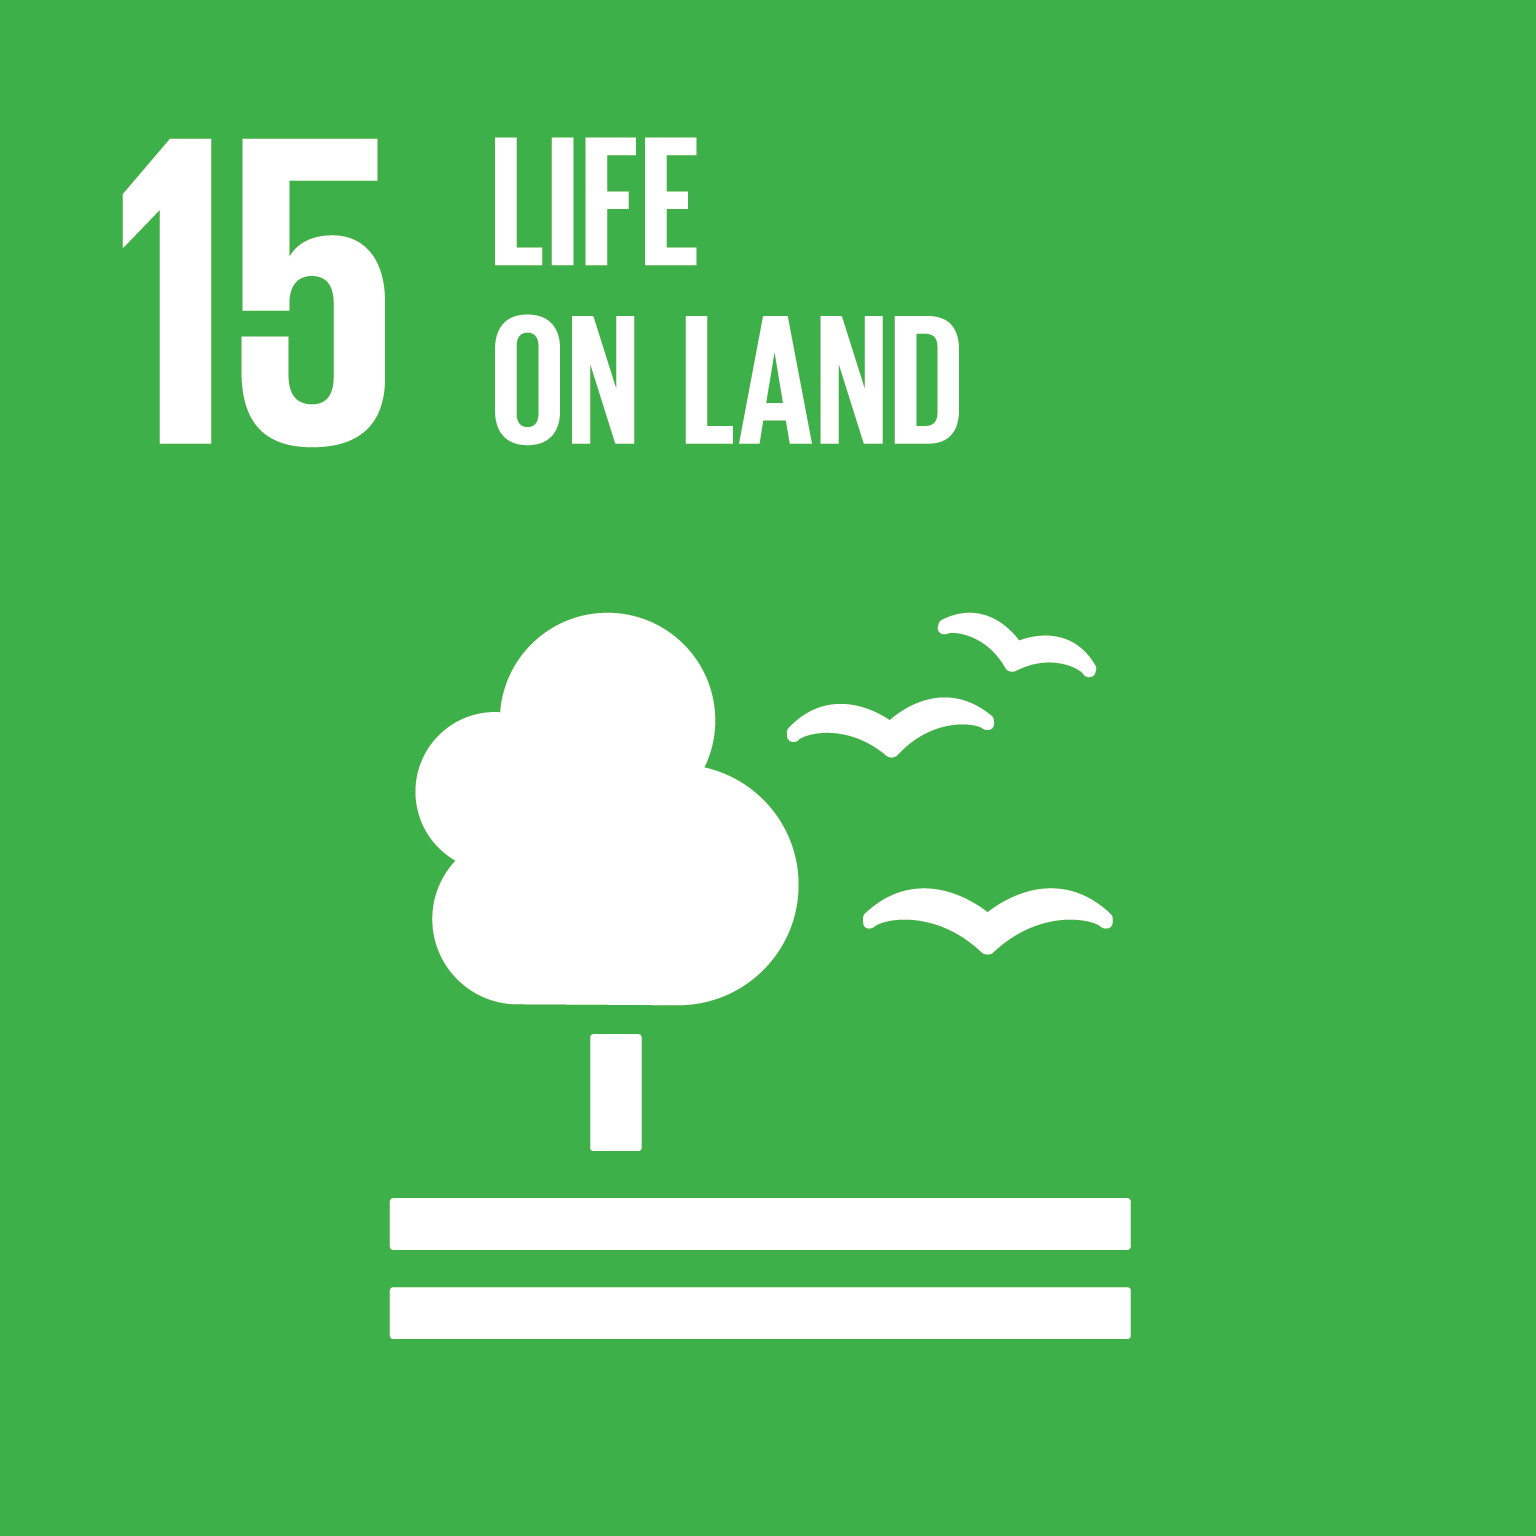 Sutainable Development Goal 15